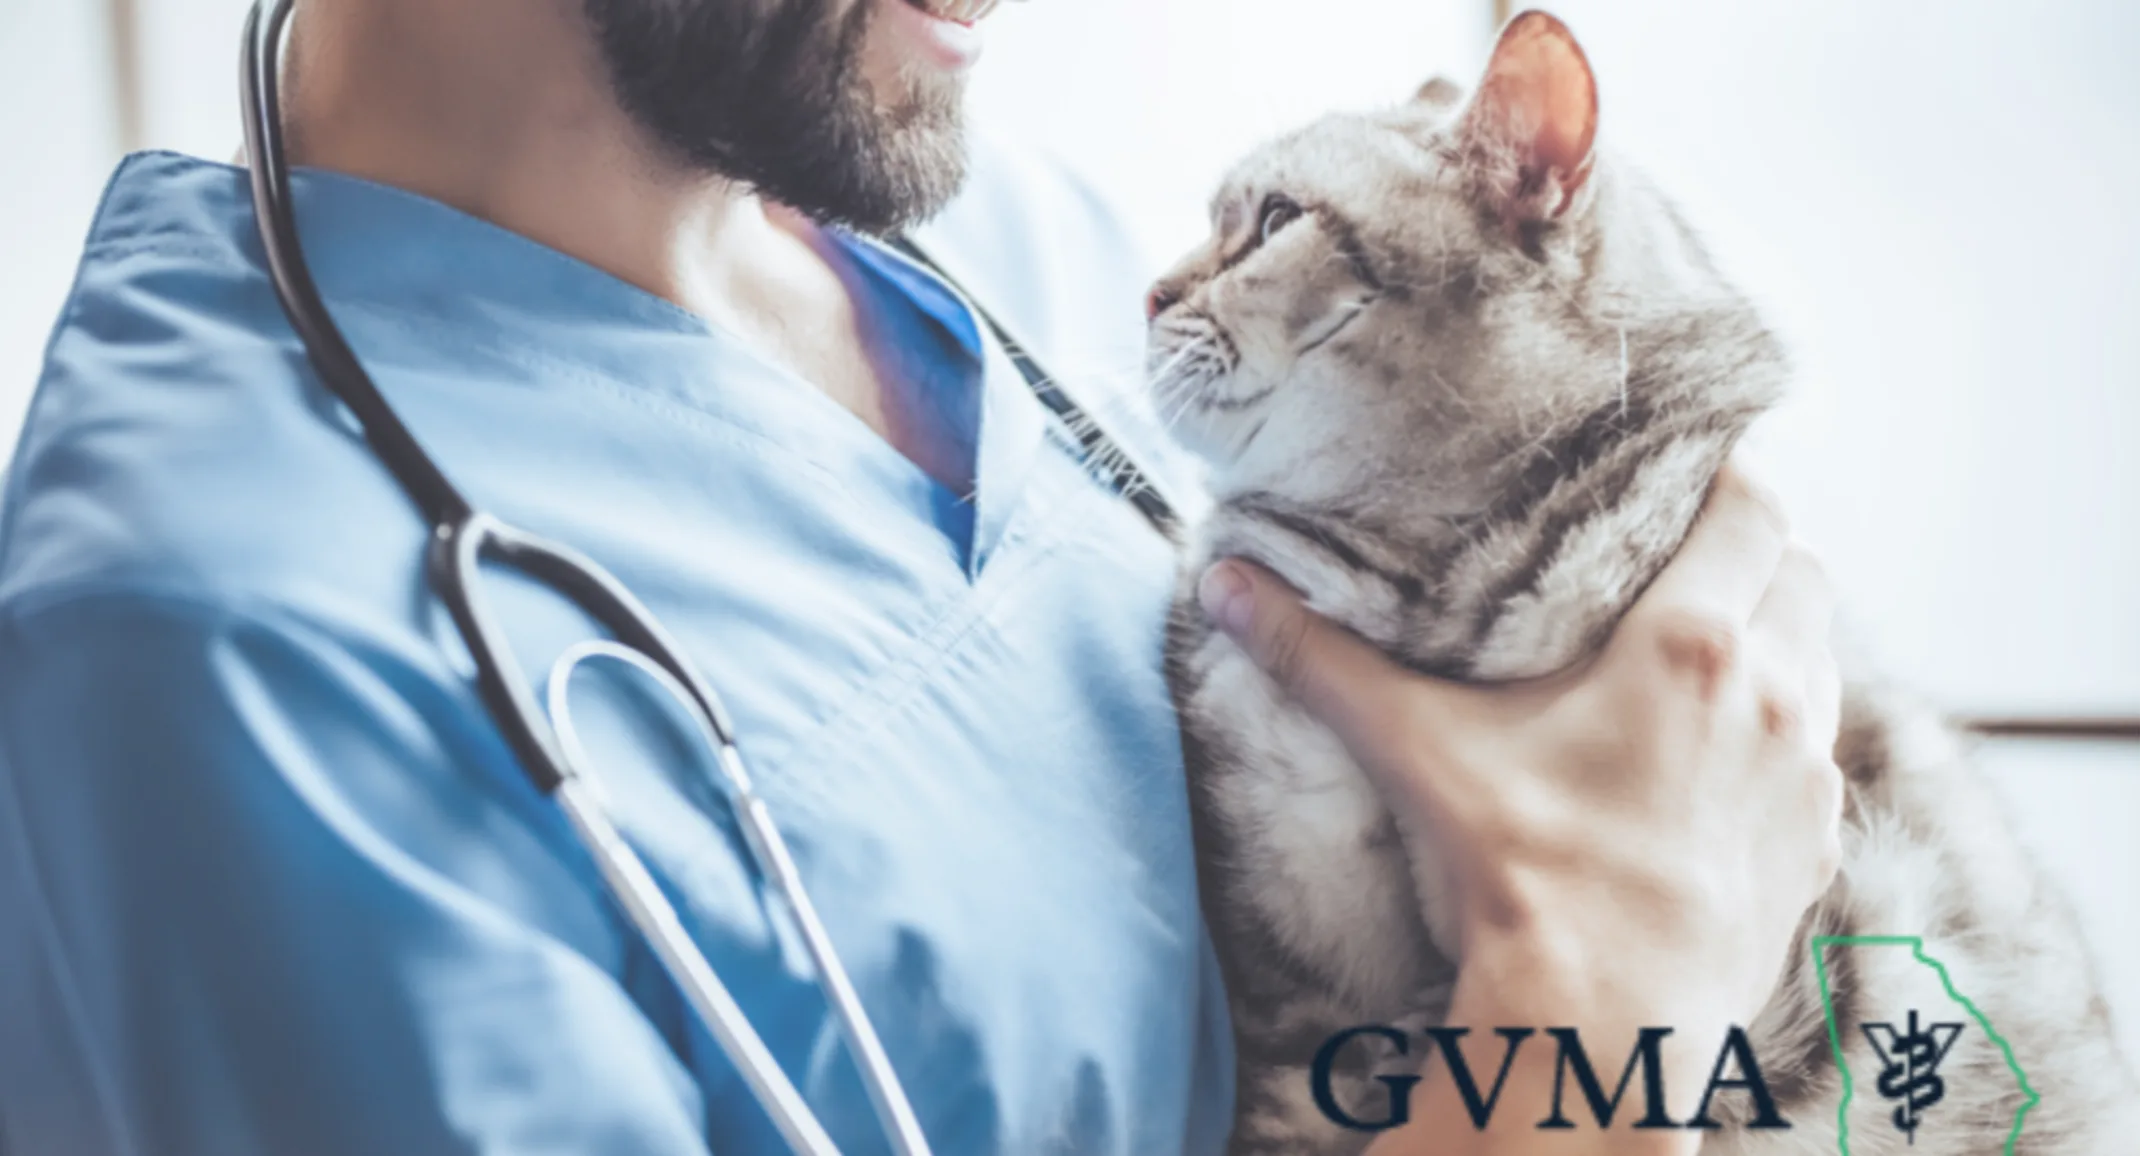 Georgia Veterinary Medical Association